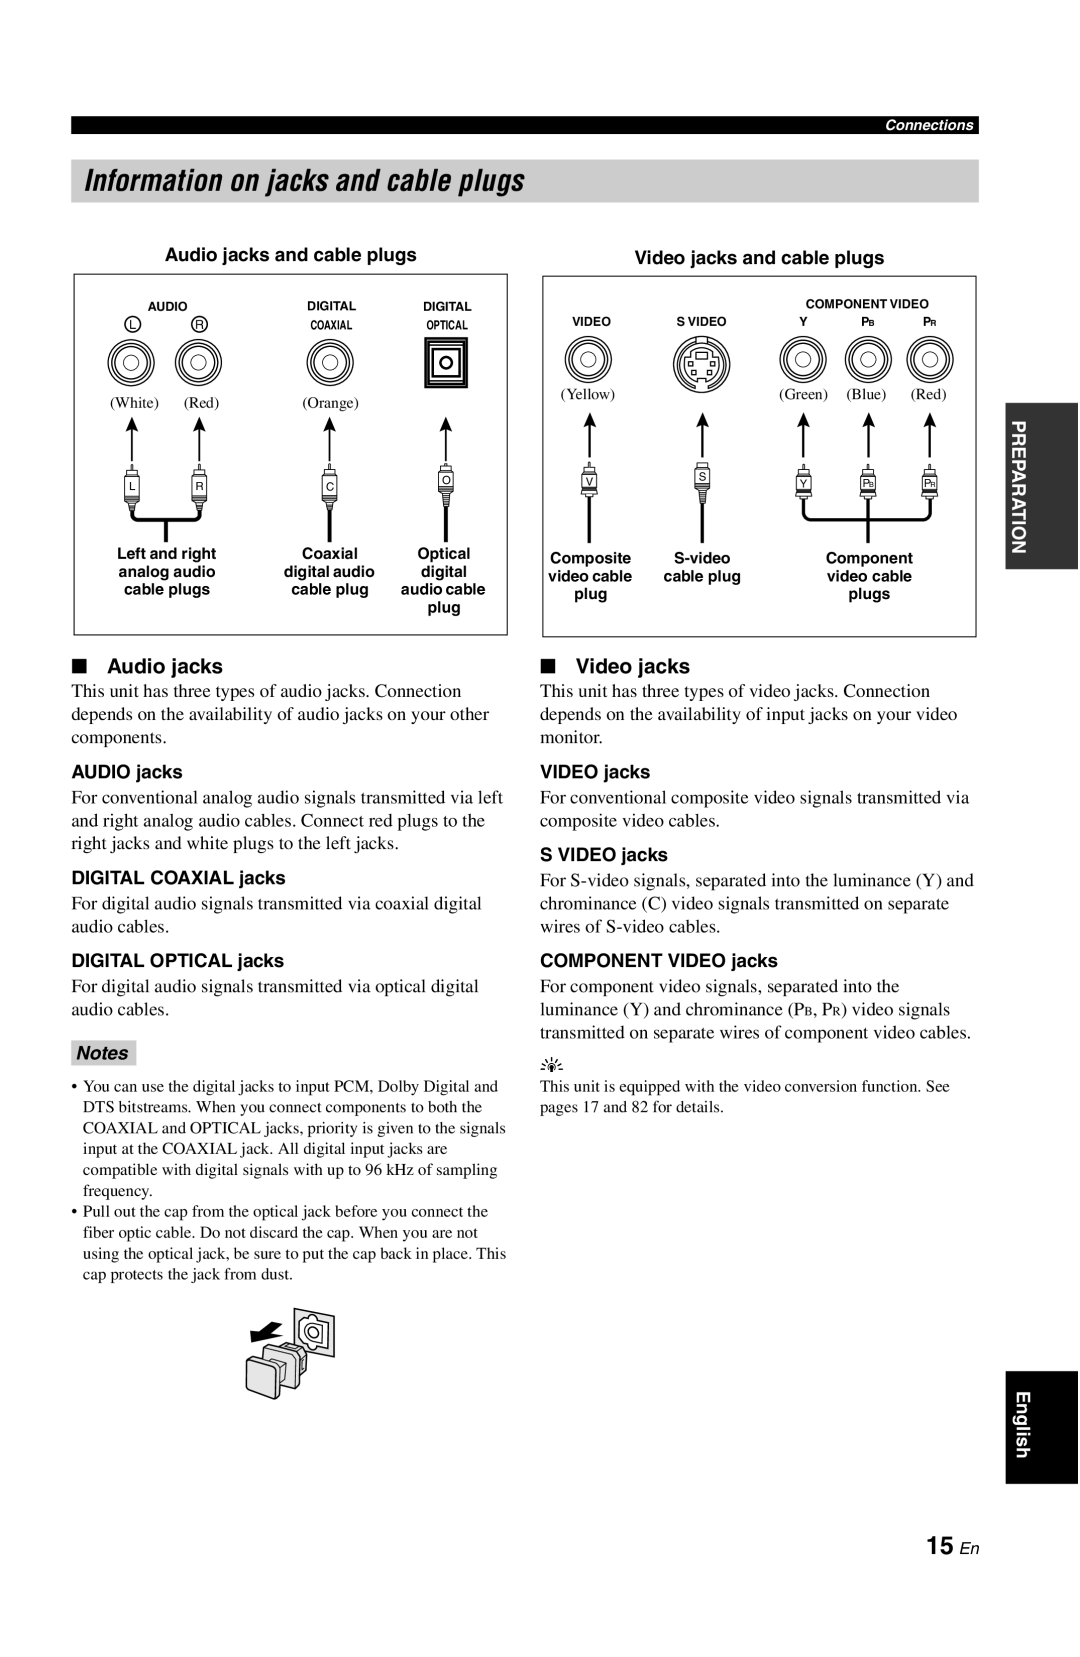 Yamaha RX-V861 owner manual Information on jacks and cable plugs, 15 En, Audio jacks, Video jacks, Notes 